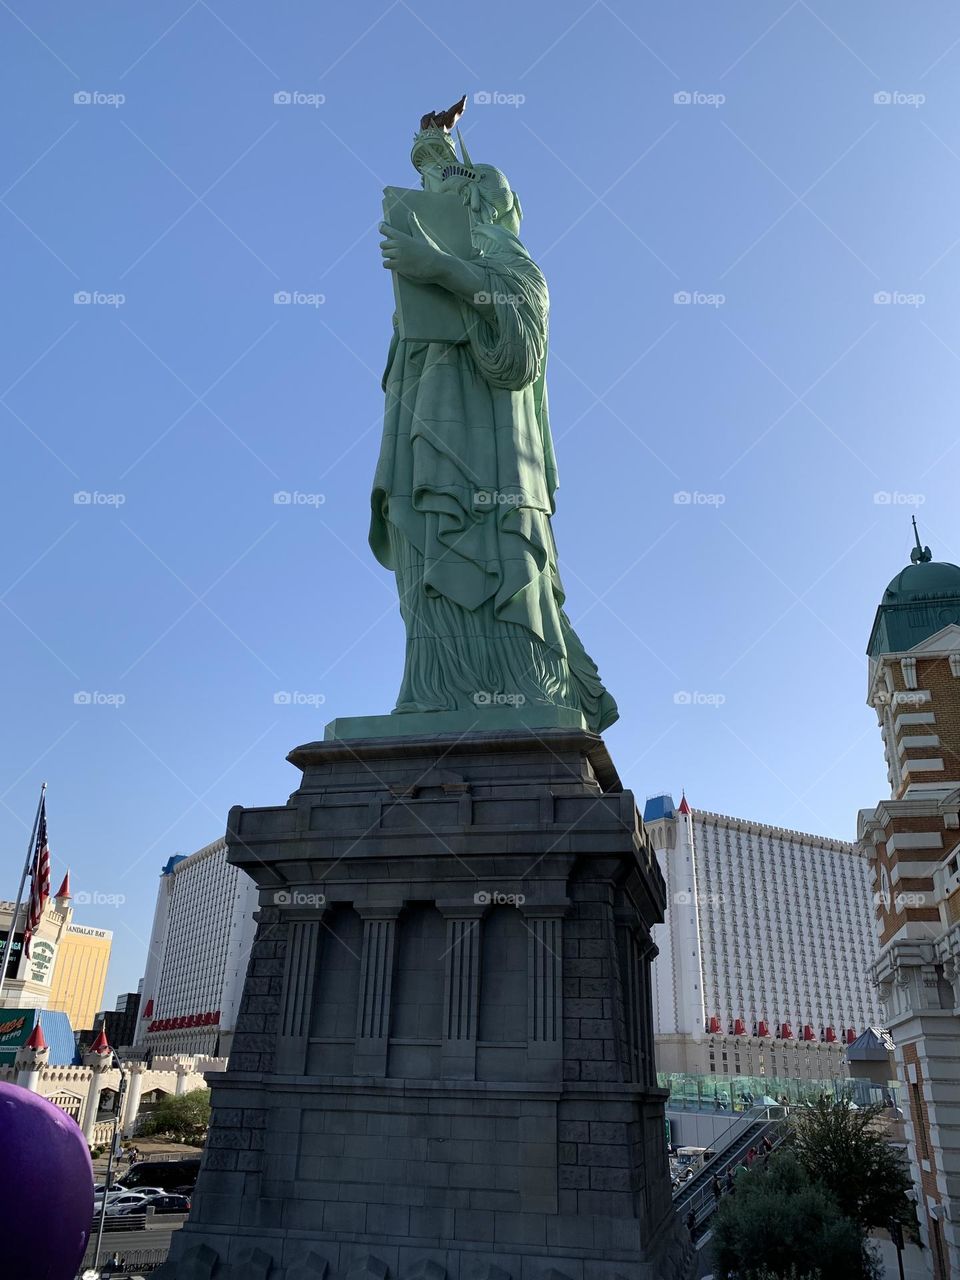 New York New York Vegas…the lady!